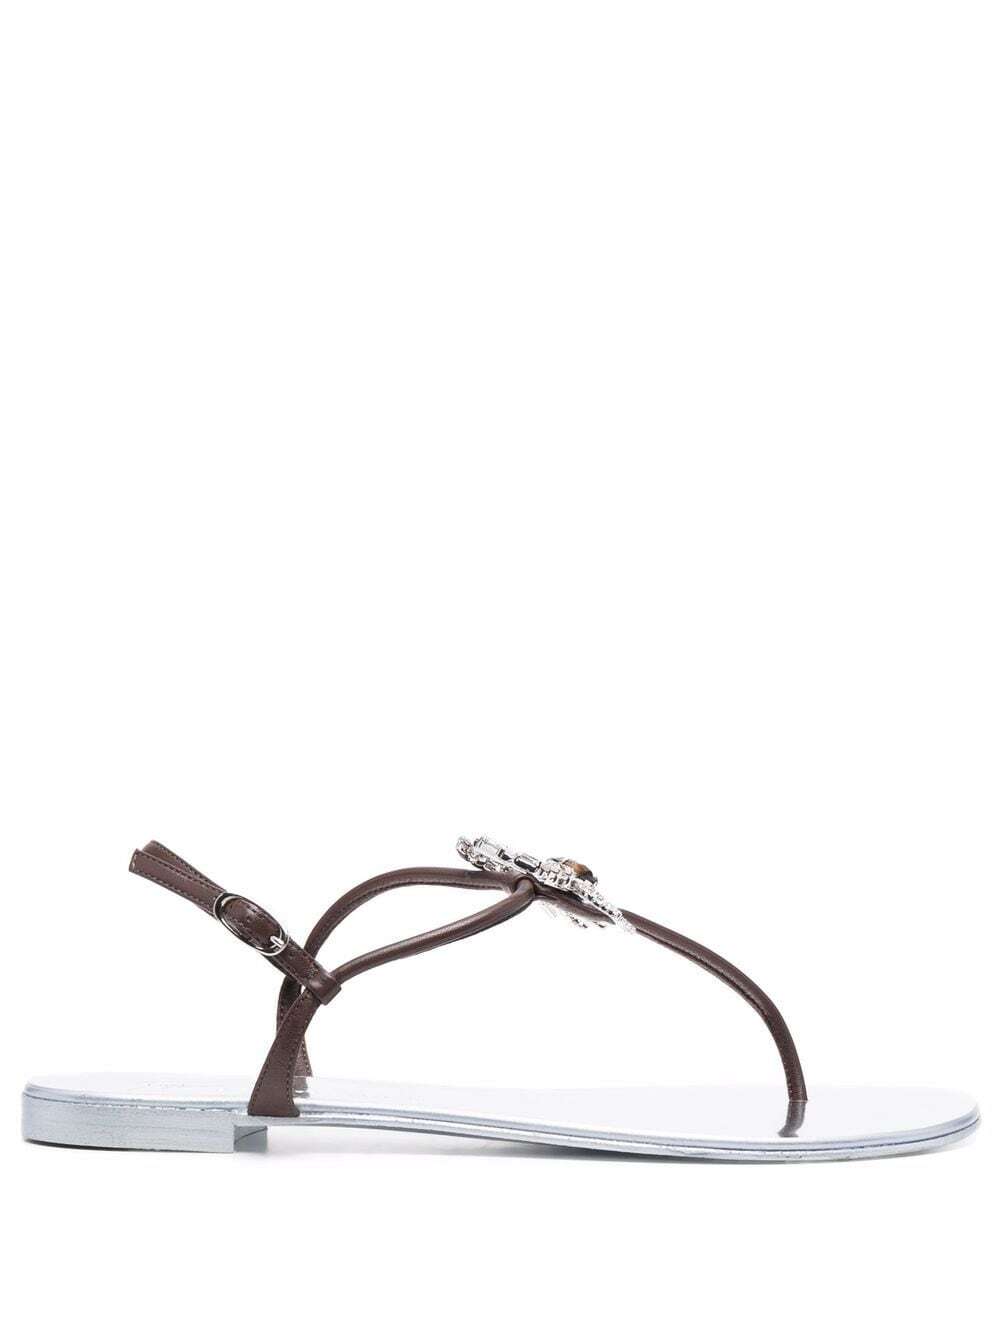 Giuseppe Zanotti embellished open-toe sandals - Brown